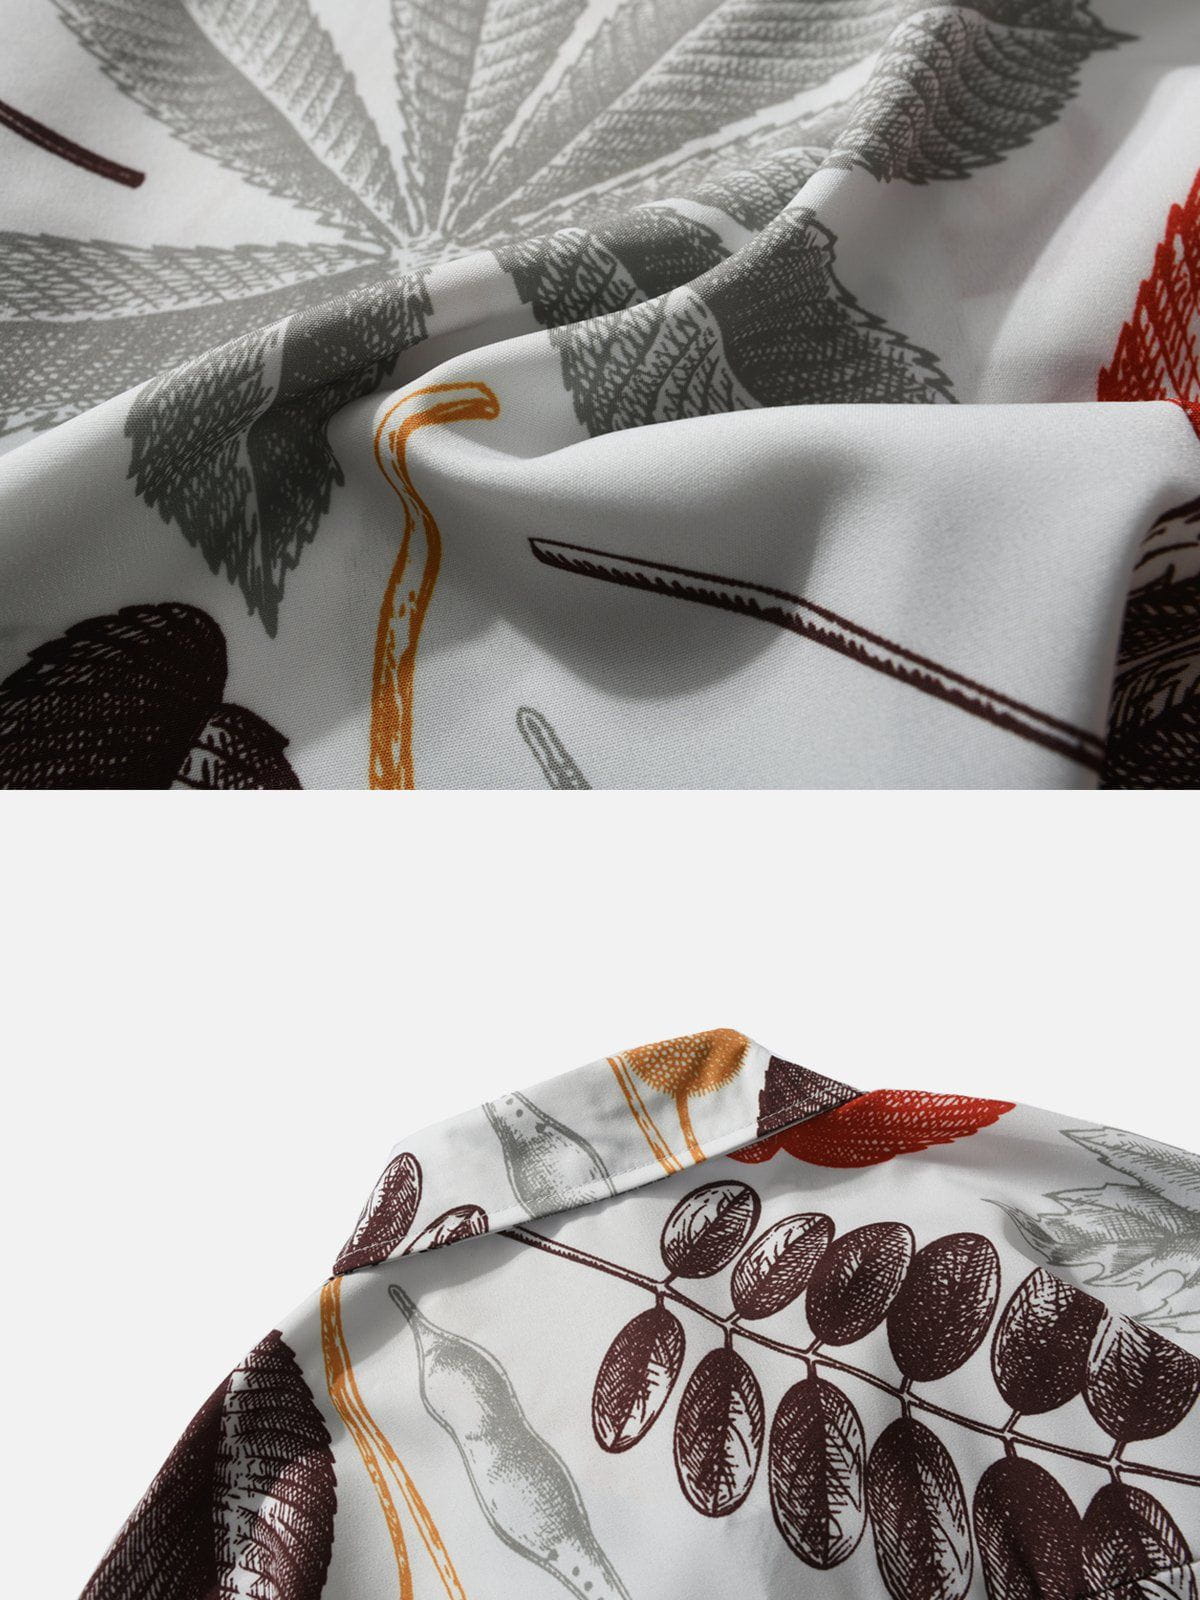 Majesda® - Leaf Print Short Sleeve Shirt outfit ideas streetwear fashion